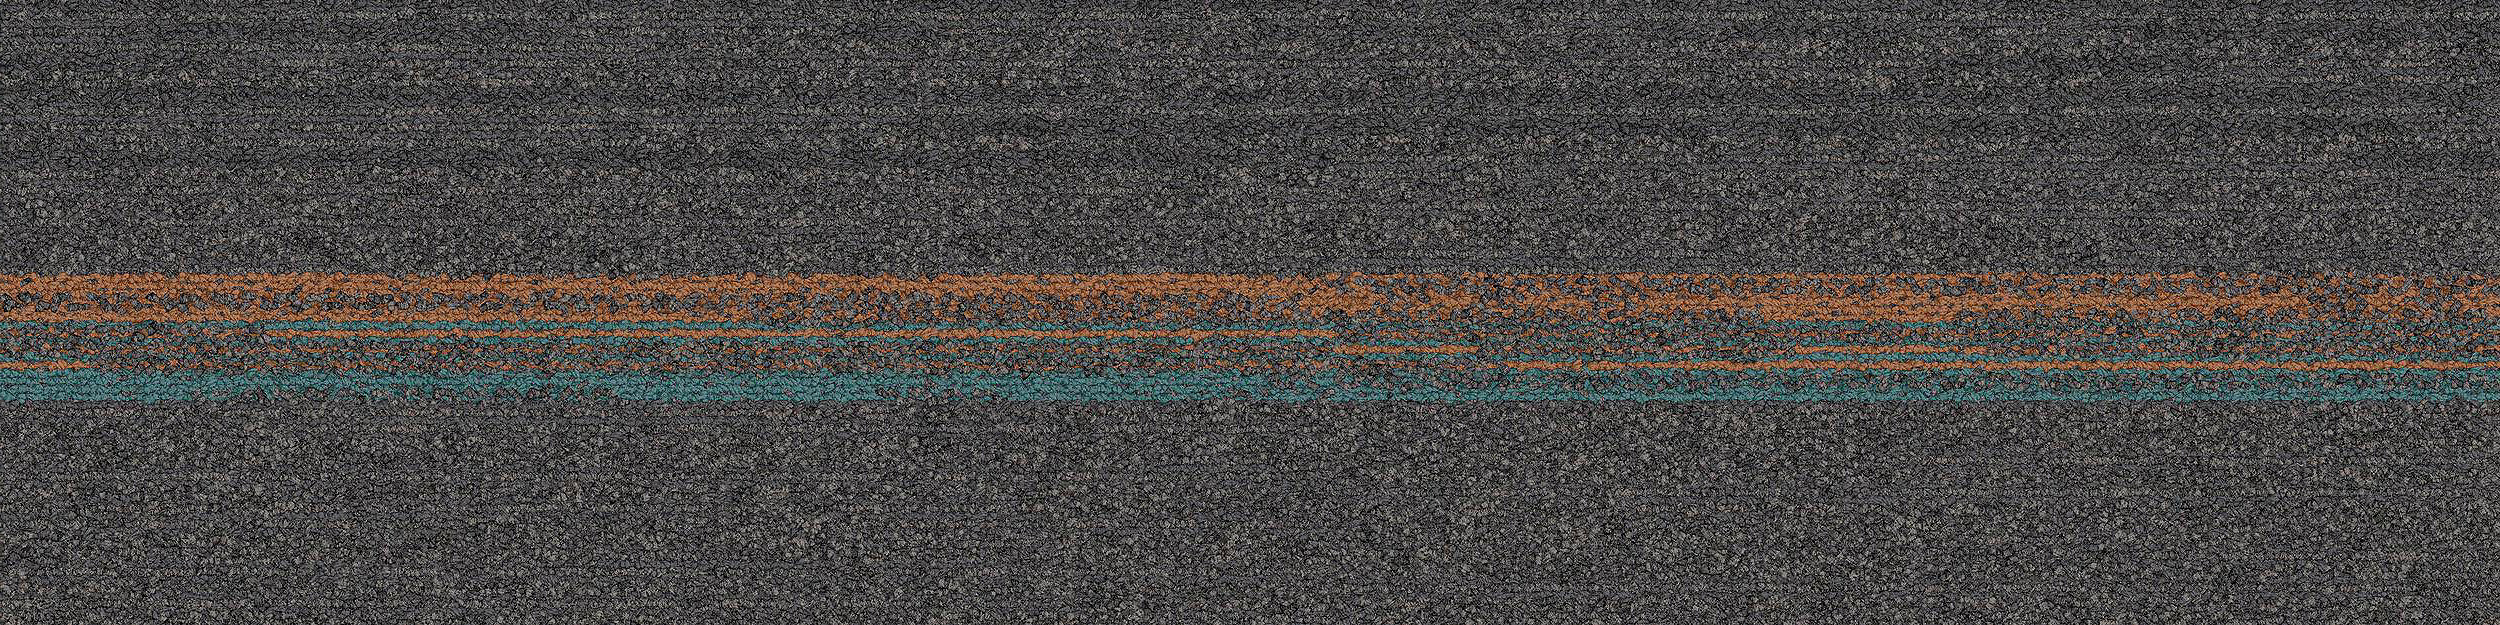 Ground Waves Carpet Tile in Iron/Colors imagen número 13